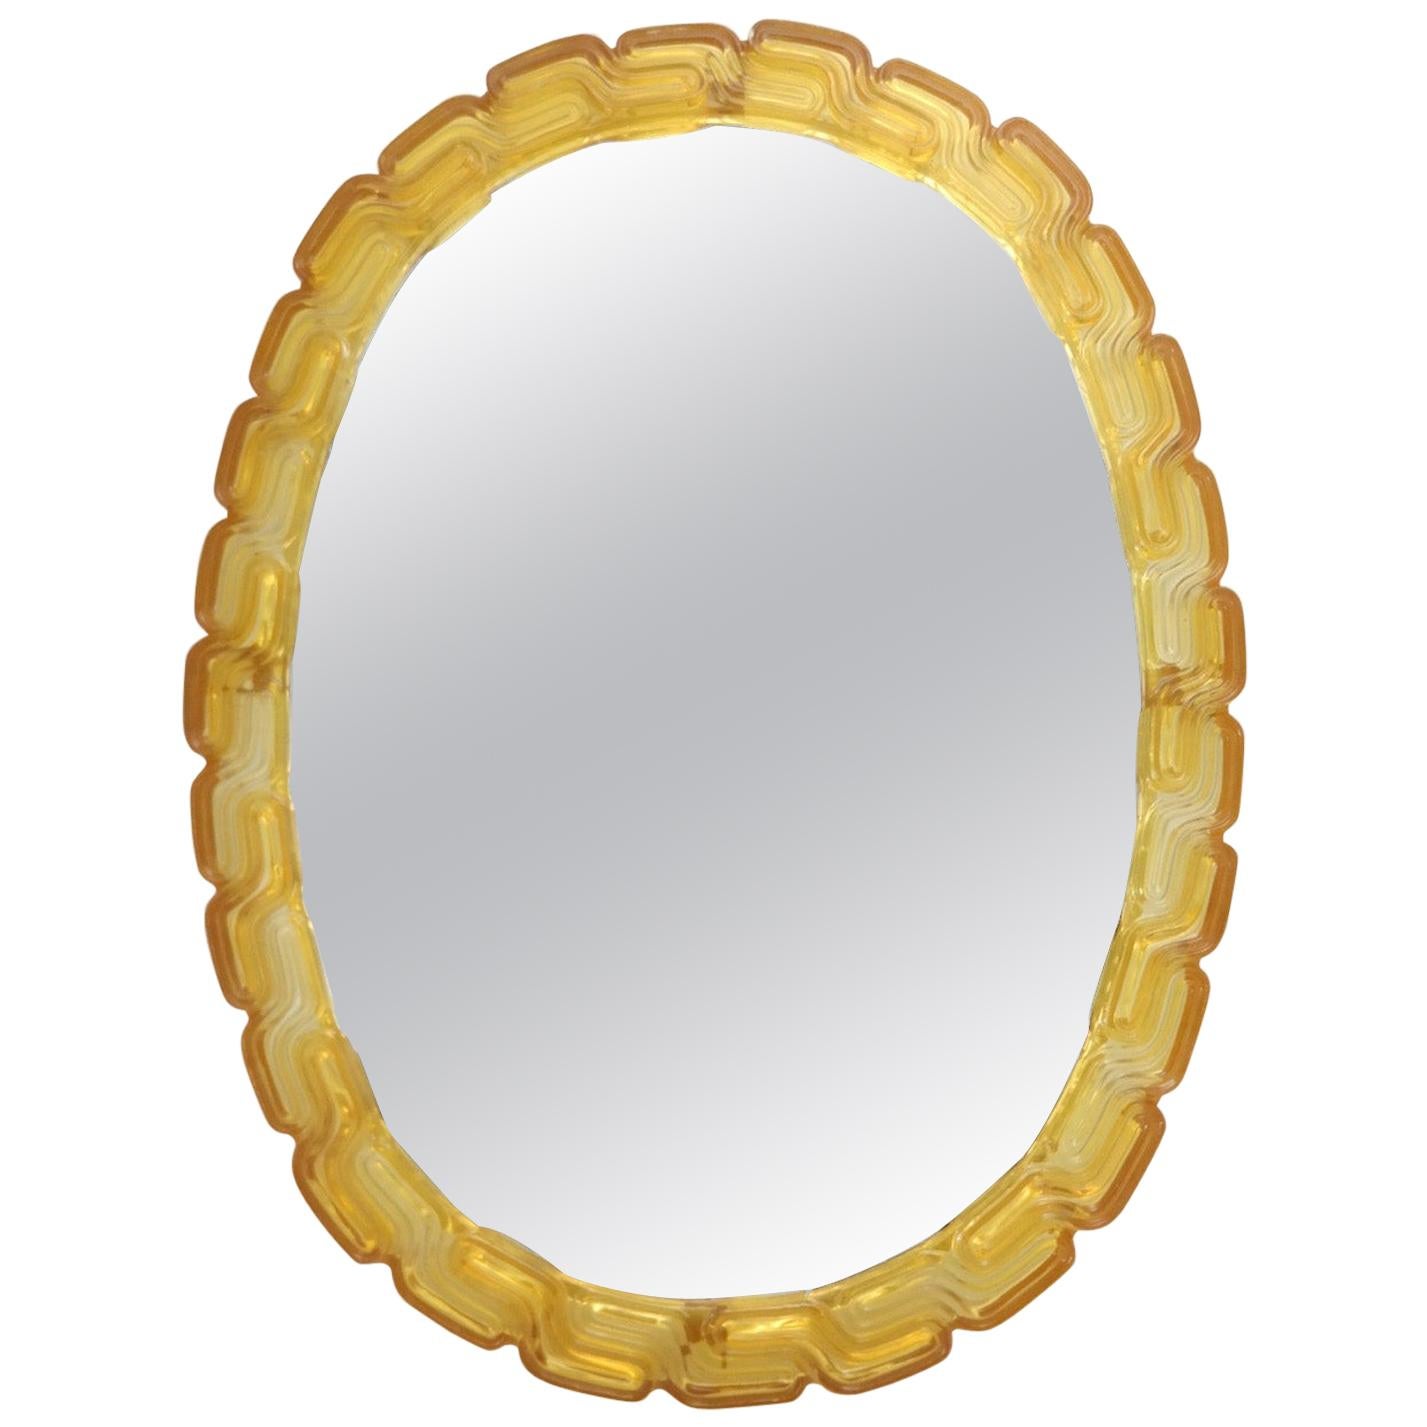 Midcentury Amber Oval Mirror